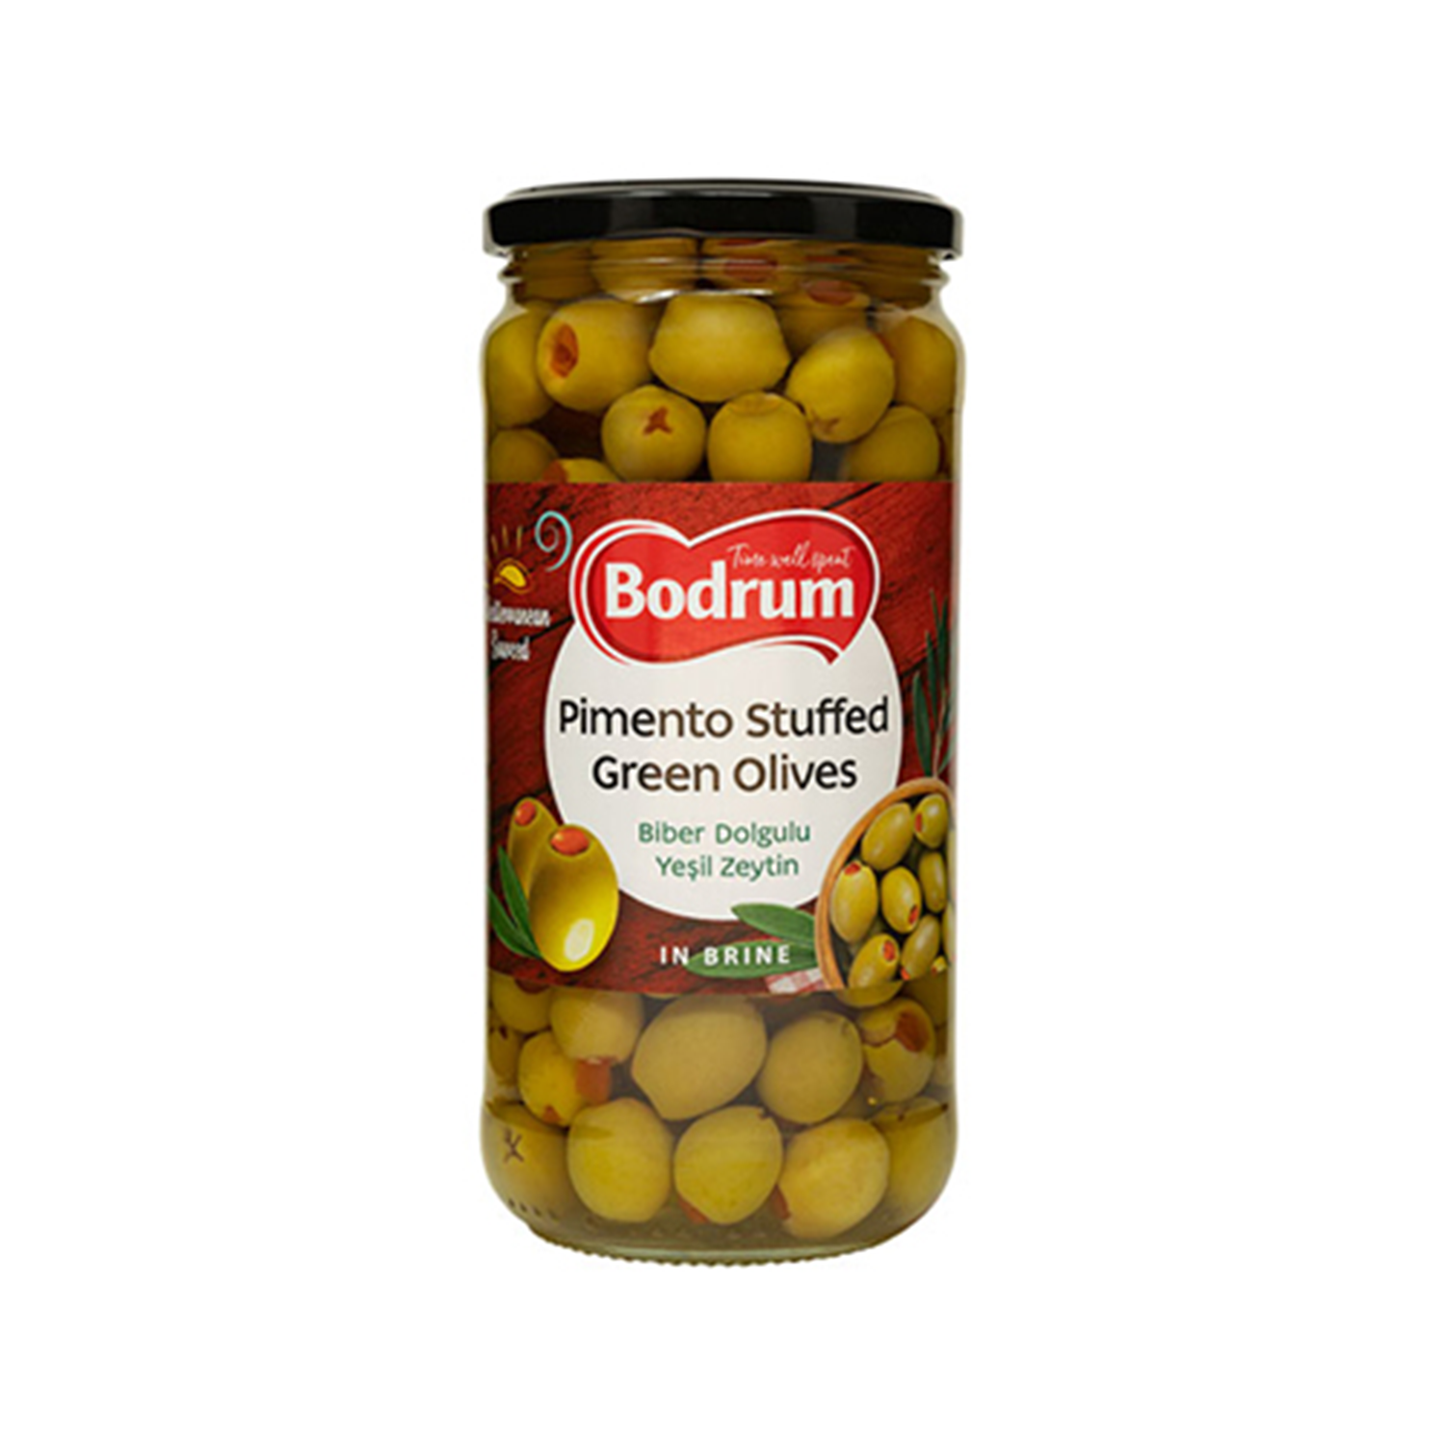 Bodrum Pimento Stuffed Green Olives 680g